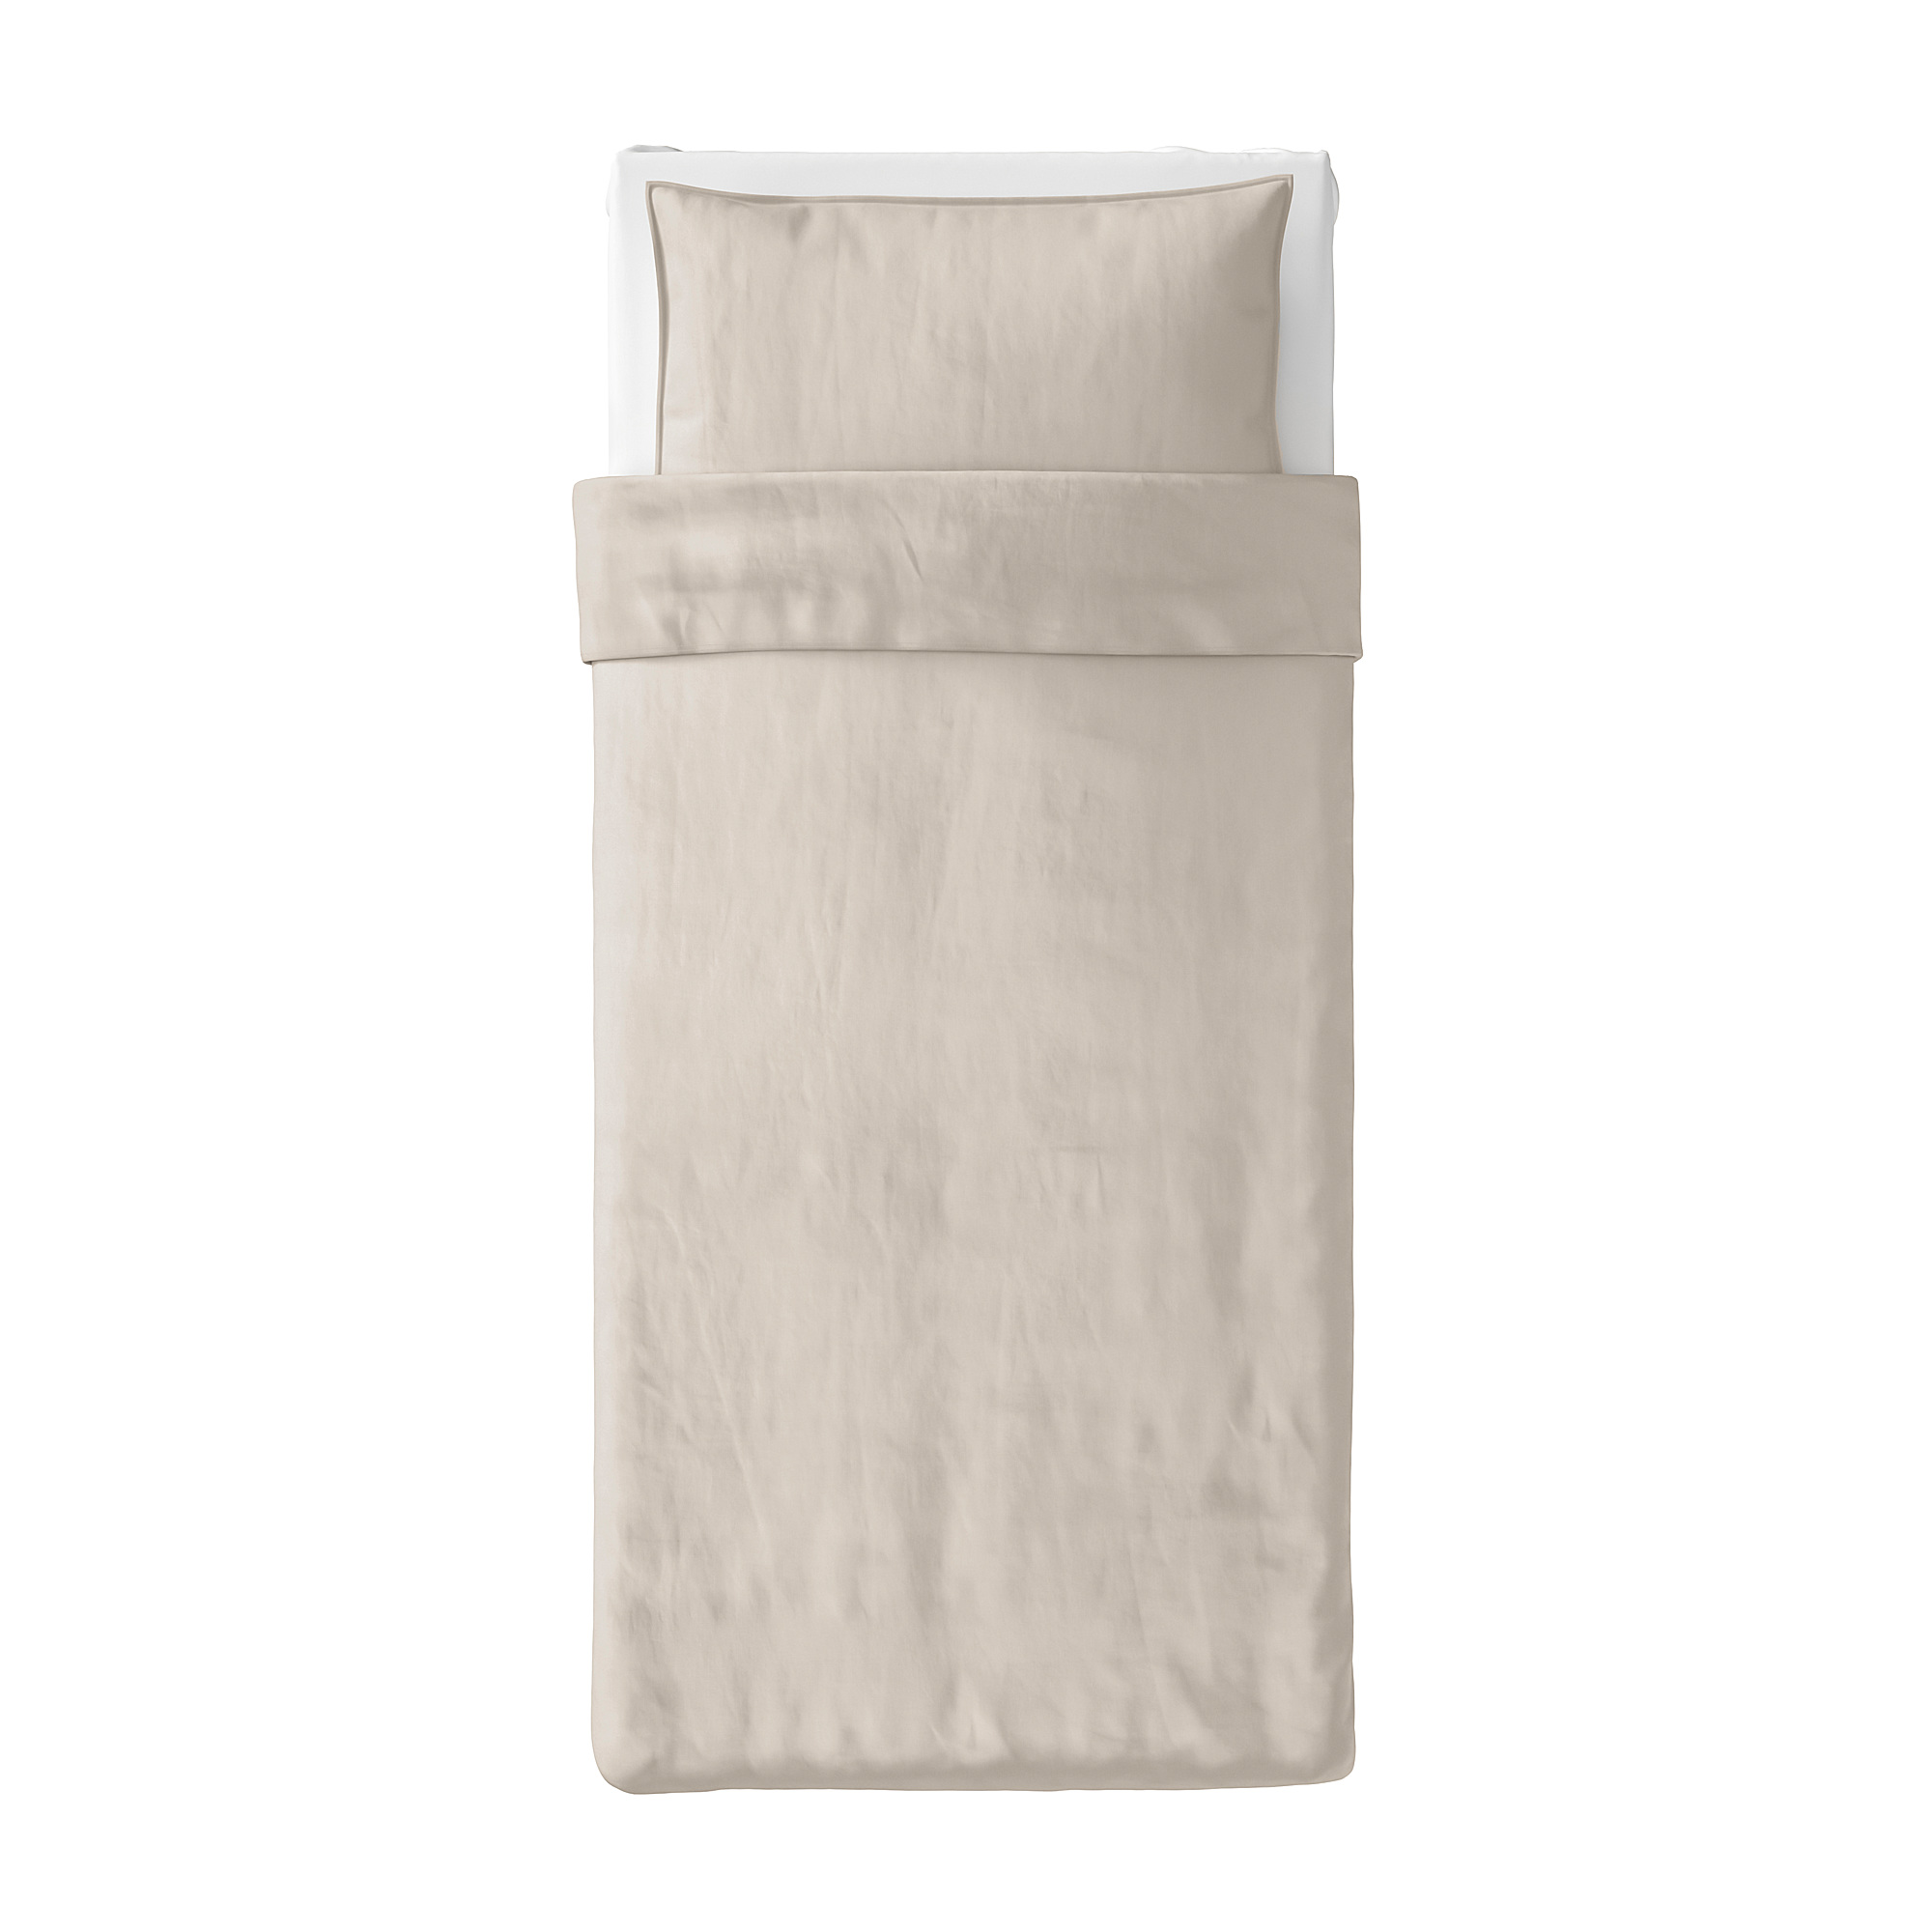 ÄNGSLILJA duvet cover and pillowcase